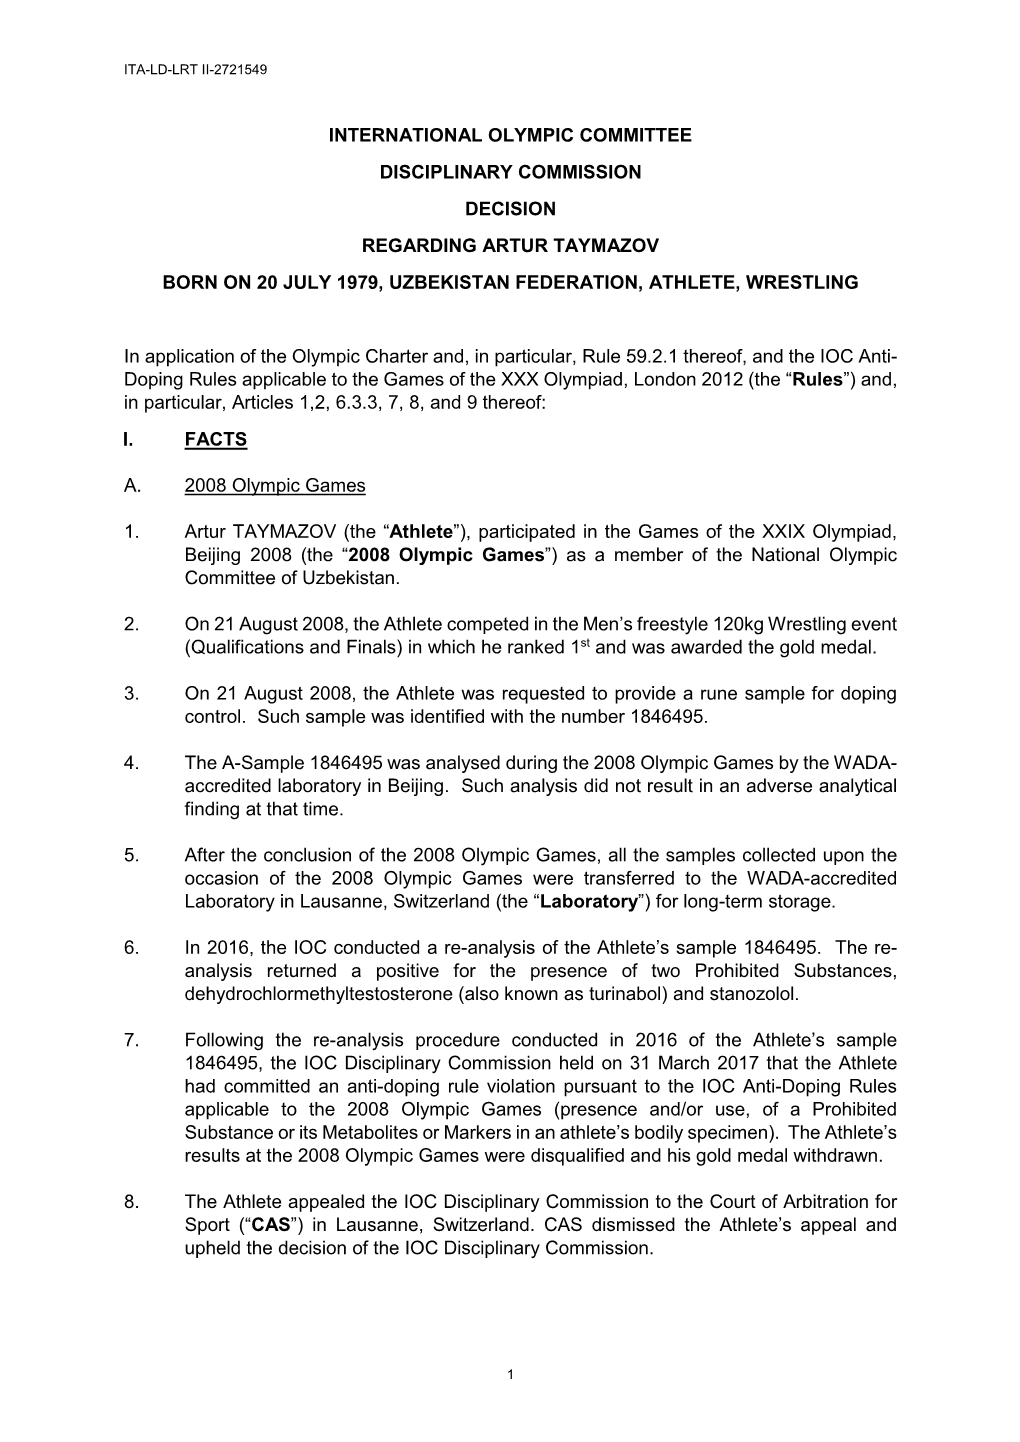 International Olympic Committee Disciplinary Commission Decision Regarding Artur Taymazov Born on 20 July 1979, Uzbekistan Federation, Athlete, Wrestling